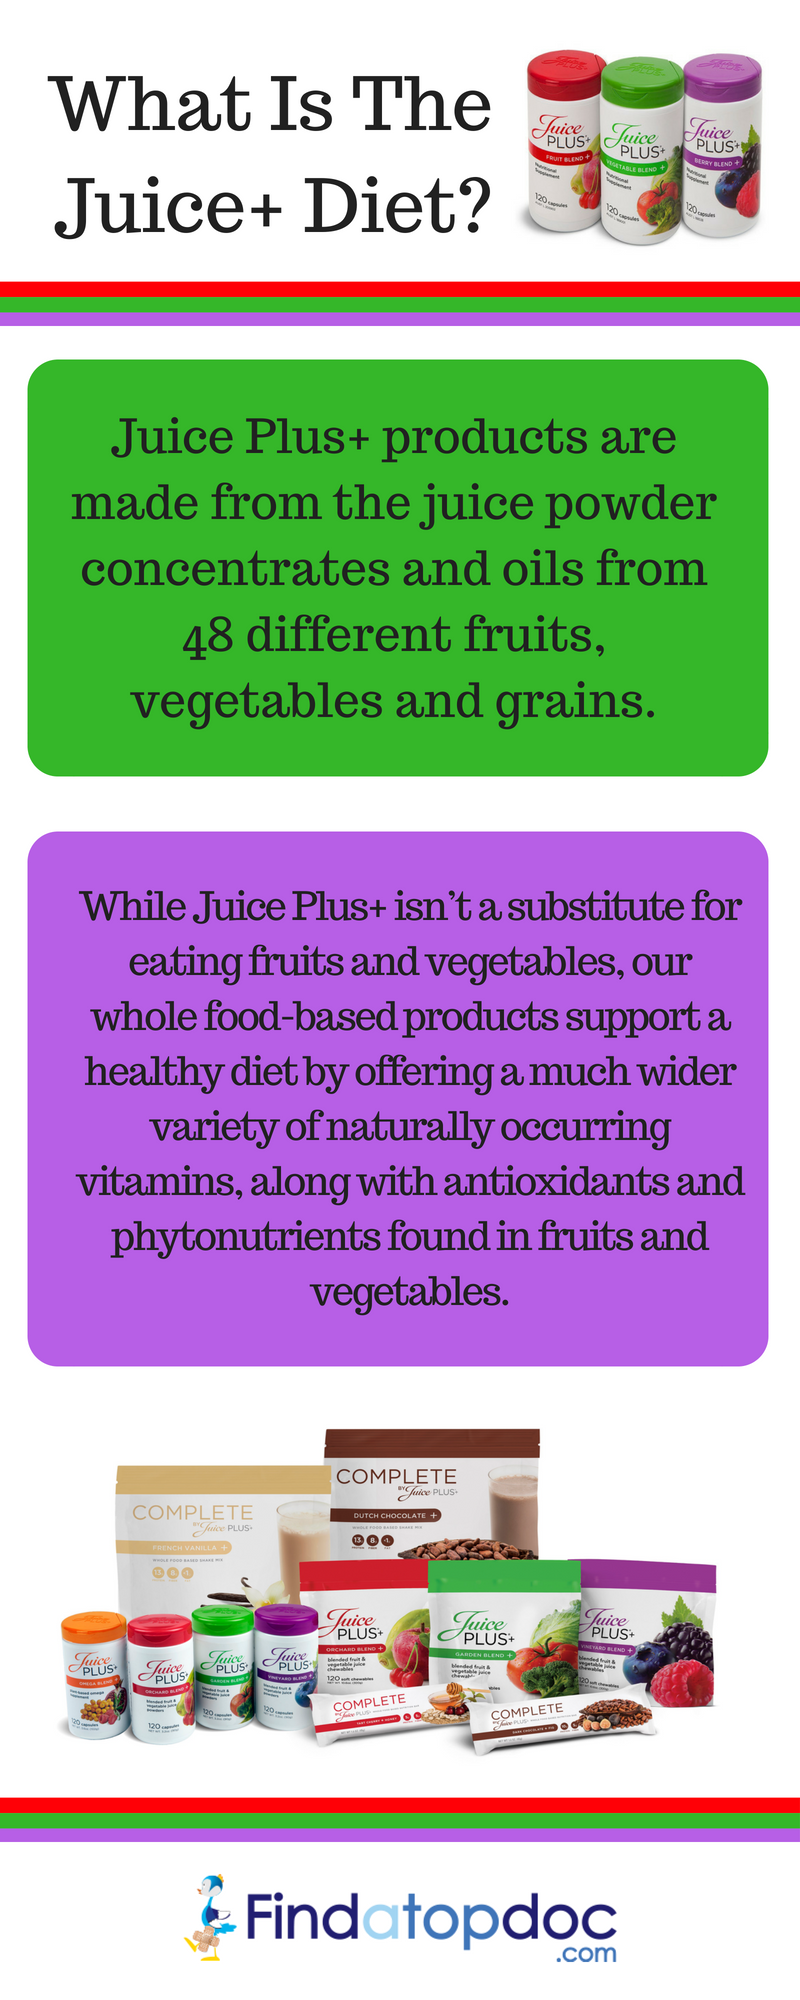 Juice Plus+ Program: Diet Review, Health Benefits, and Dosage